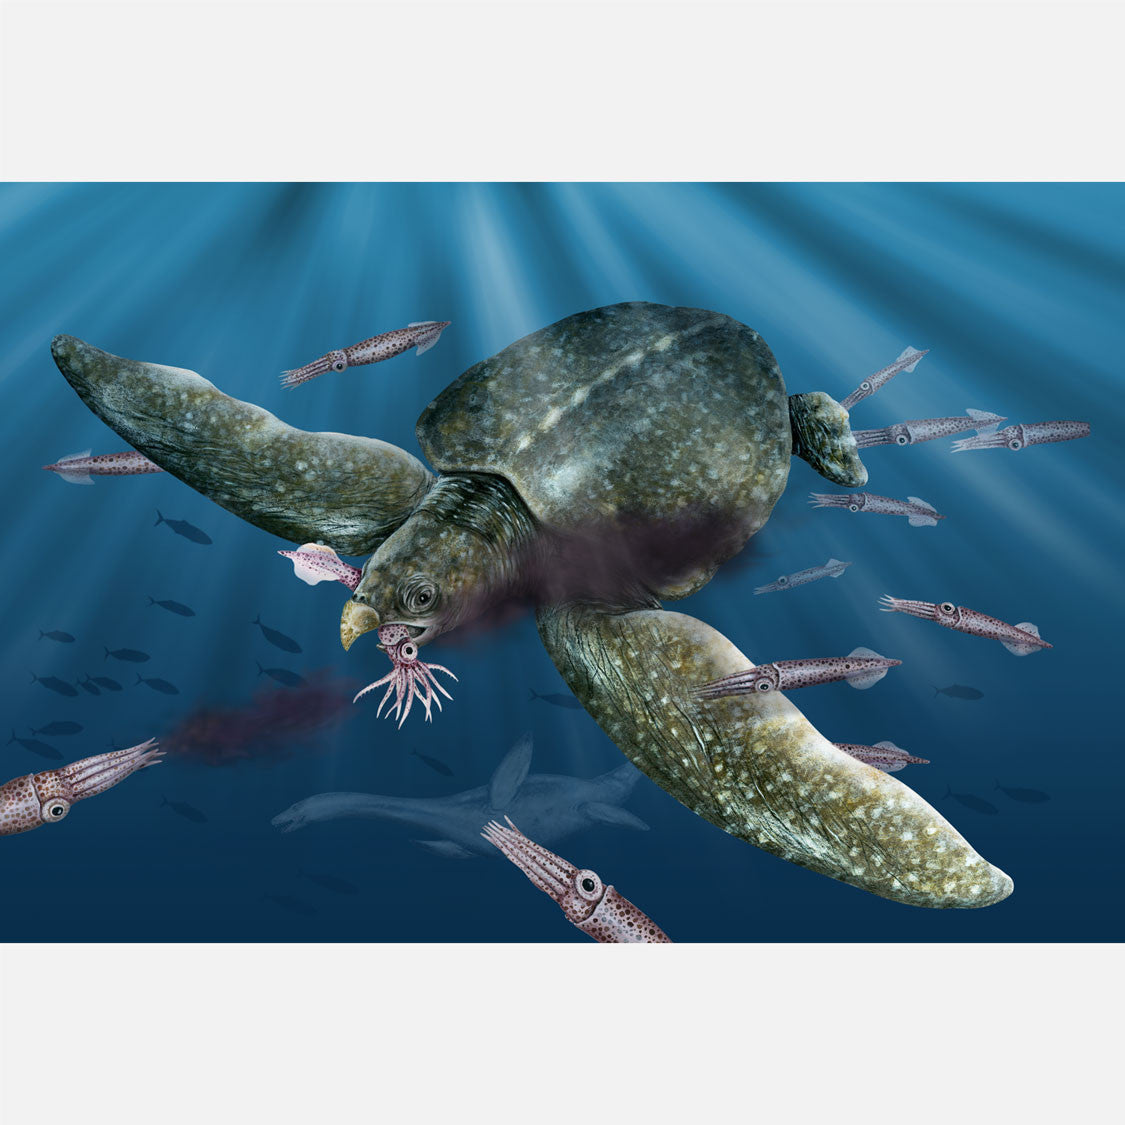 This illustration is of Archelon, a genus of extinct sea turtles, eating belemnites.